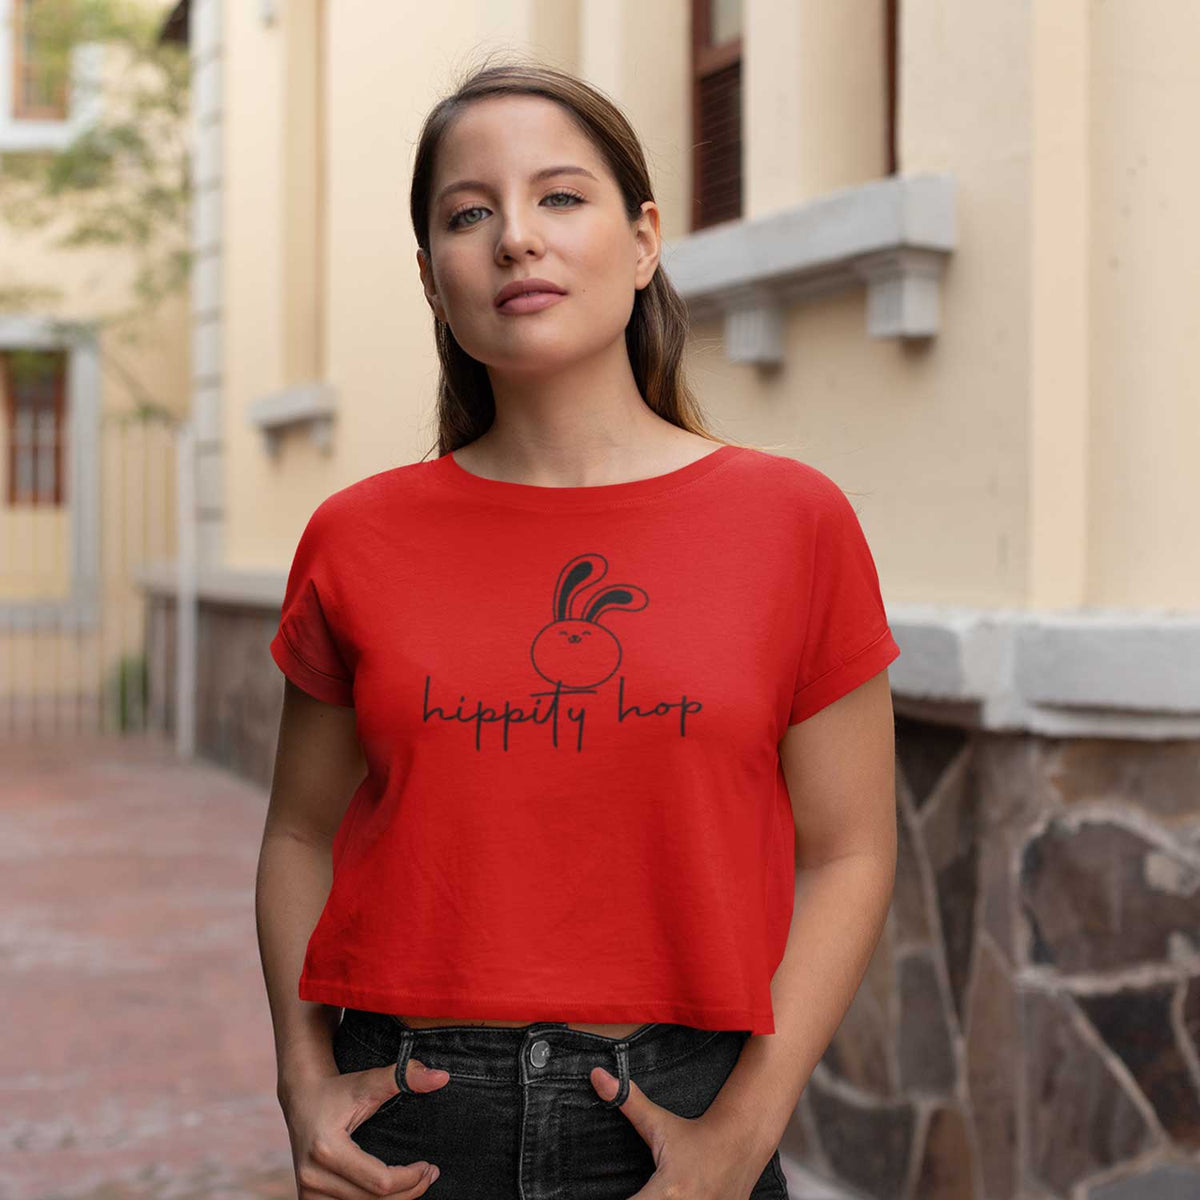 Hippity Hop Printed Crop Top Tshirt